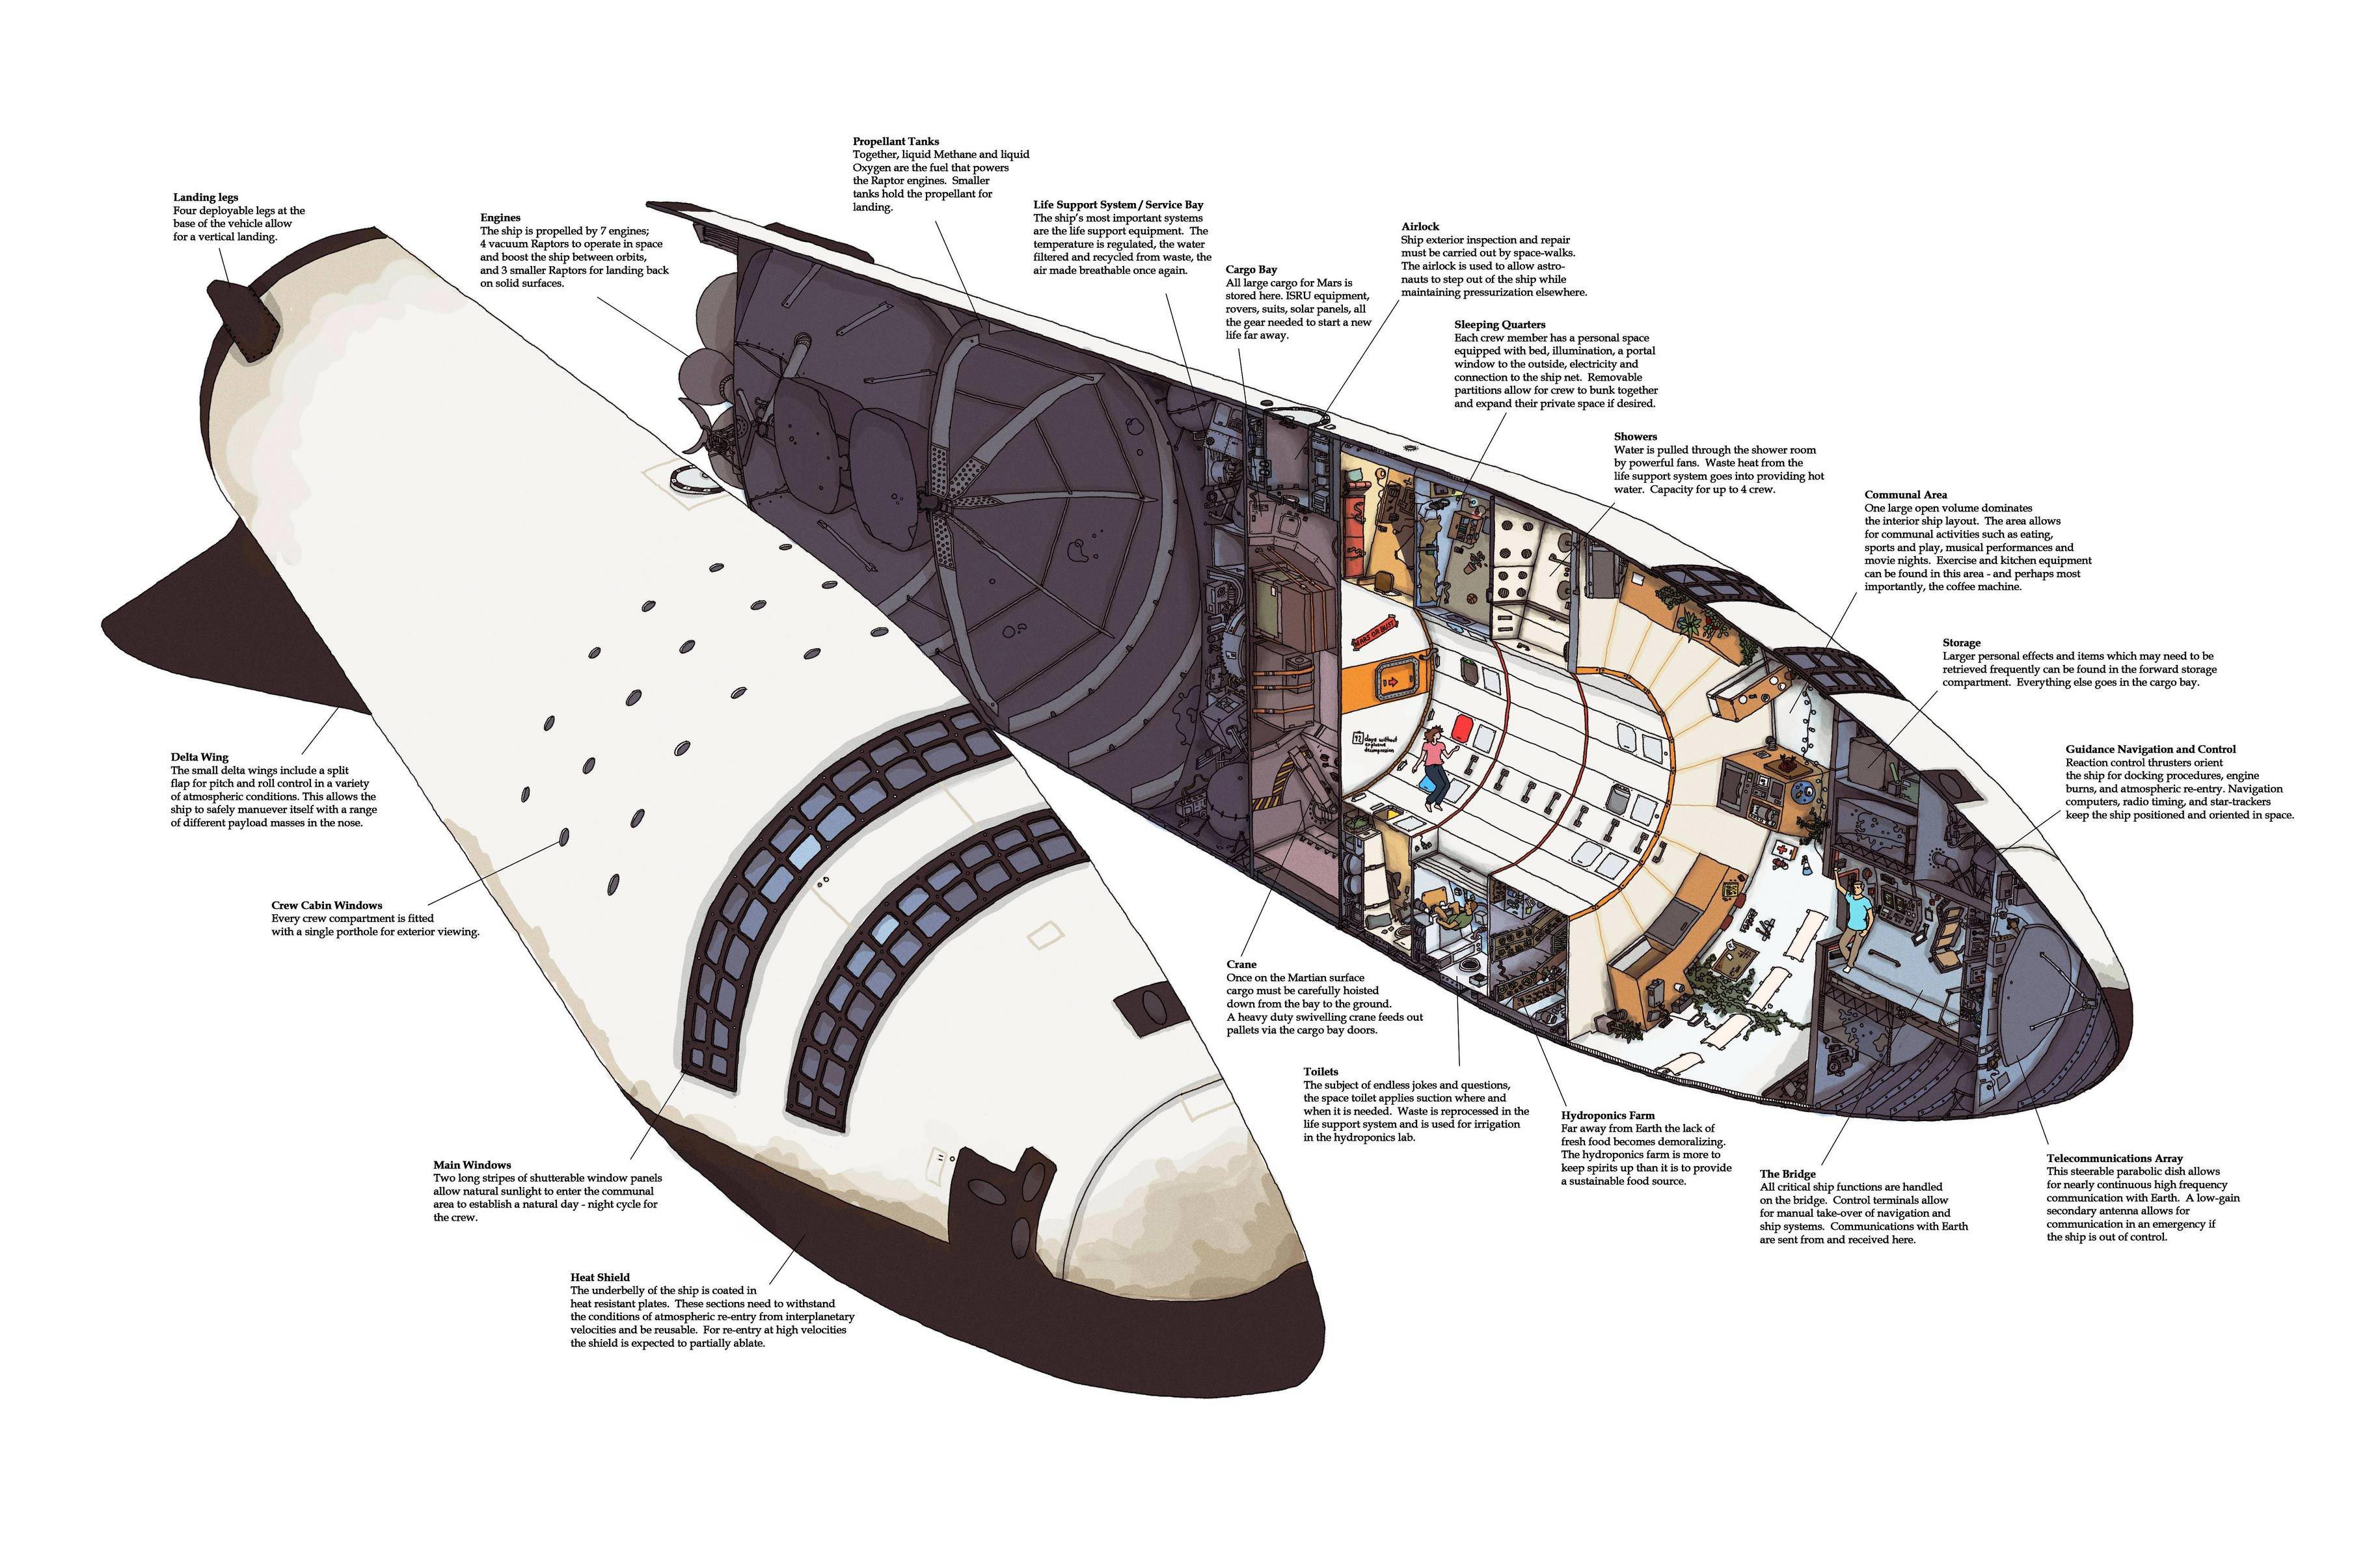 Big Falcon Rocket cutaway